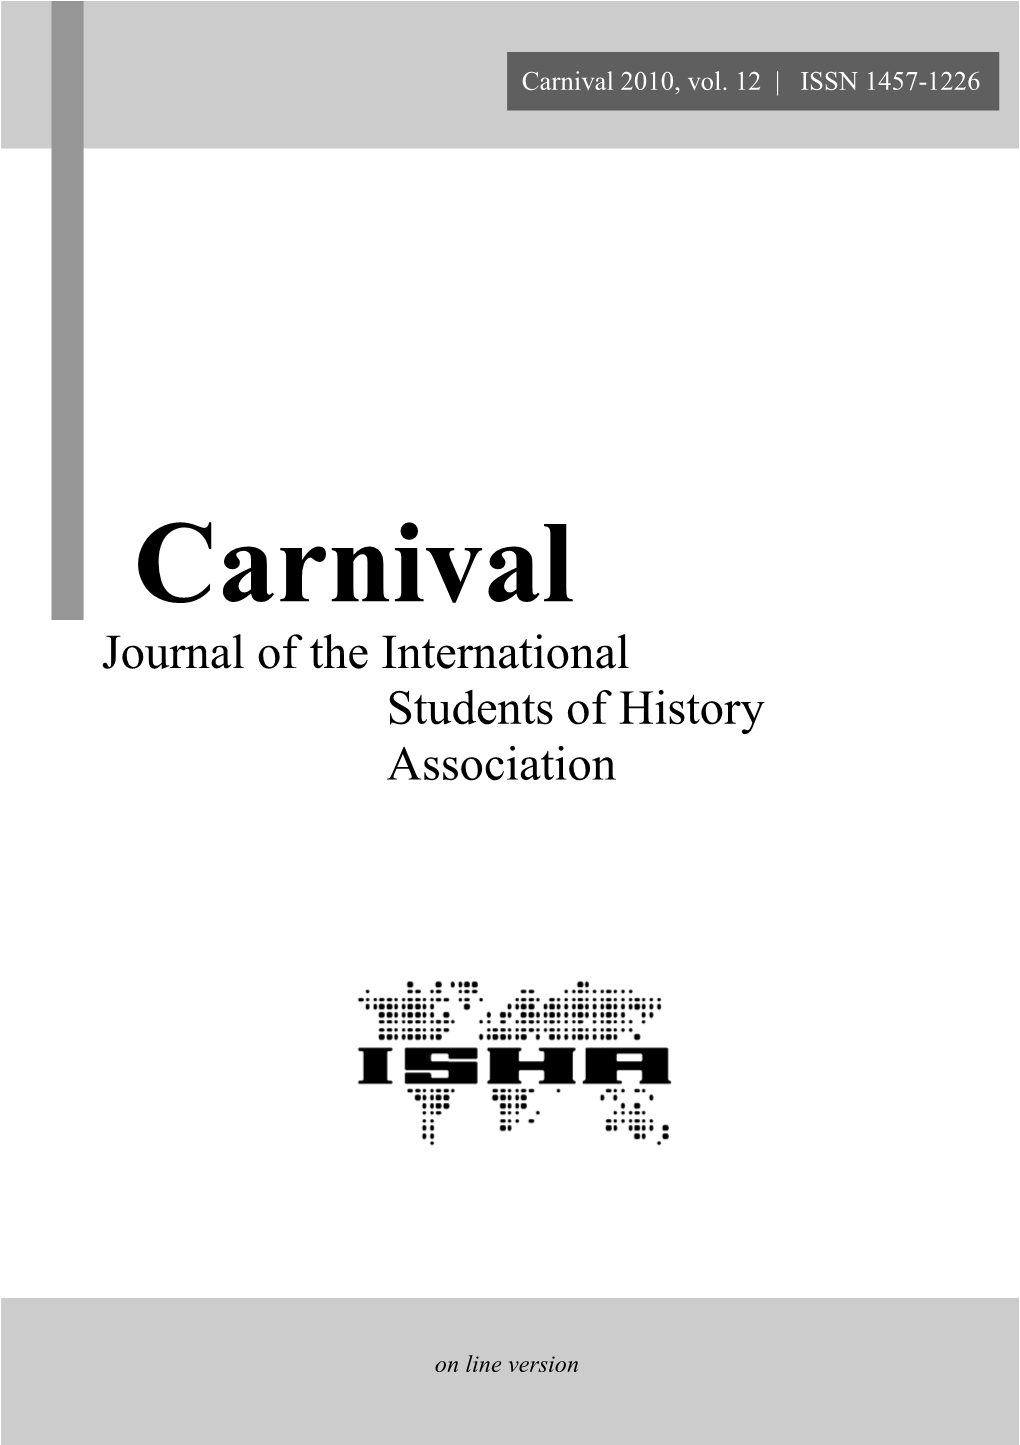 Carnival 2010 Online Version